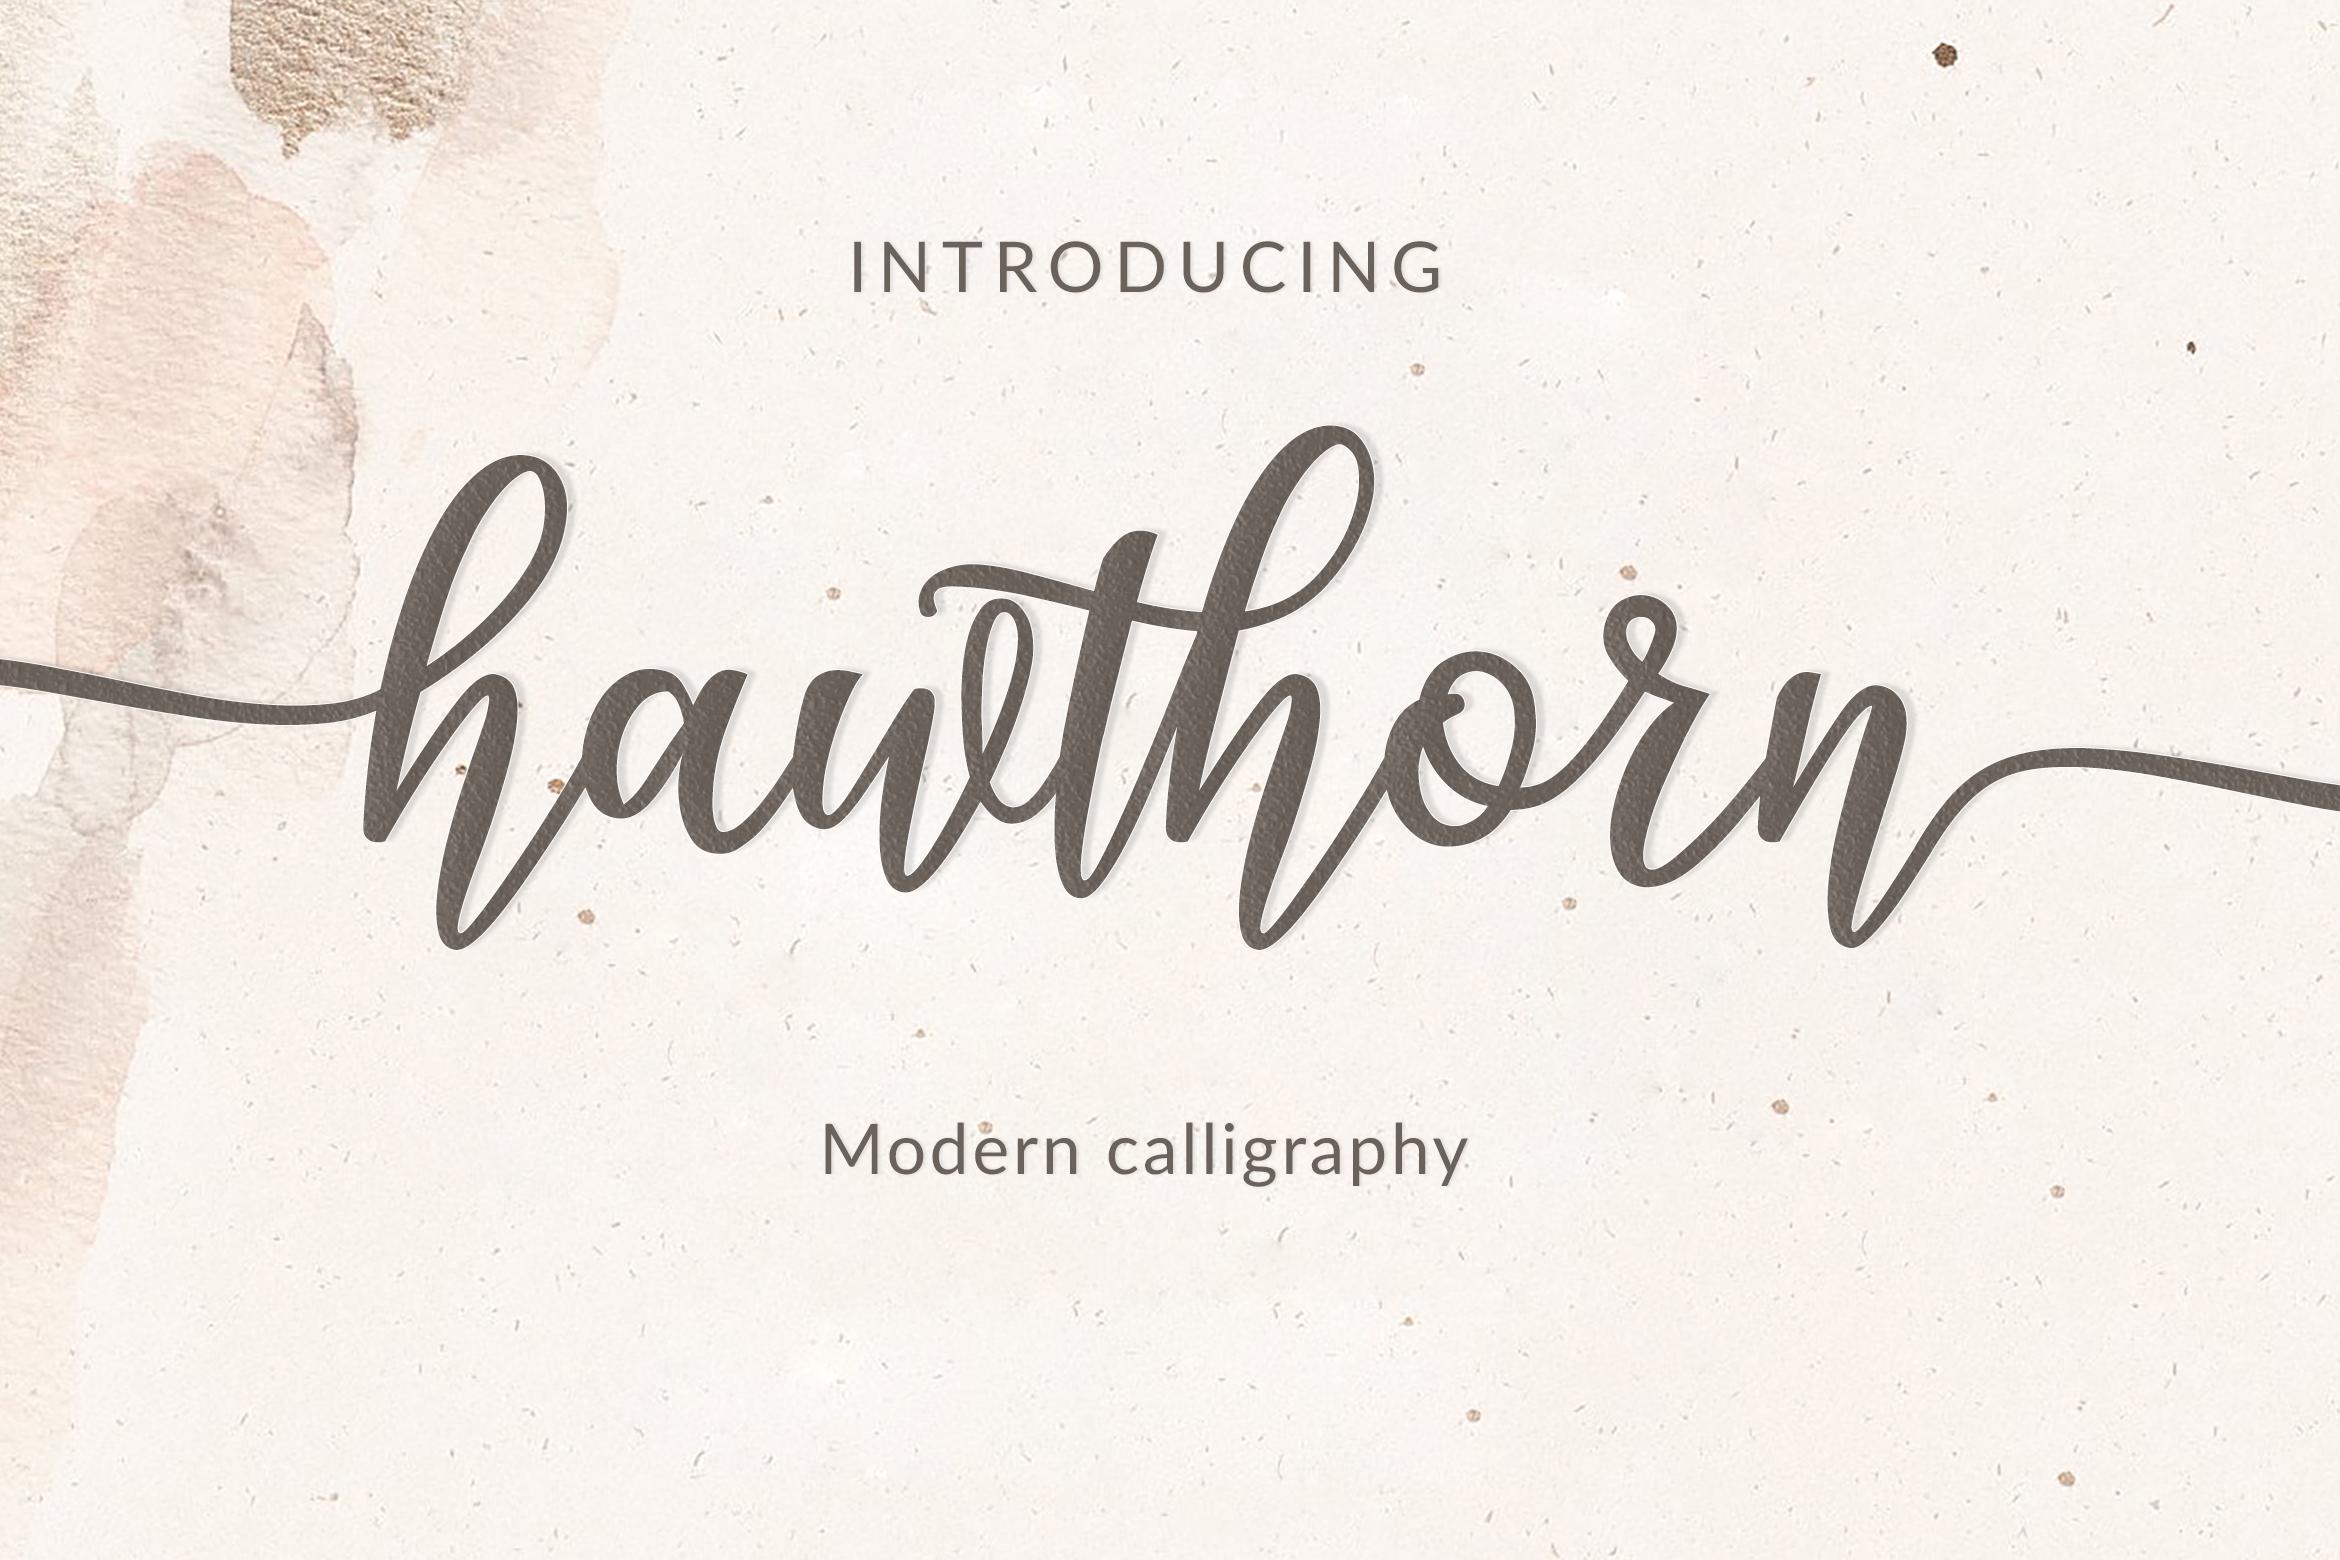 Hawthorn Font